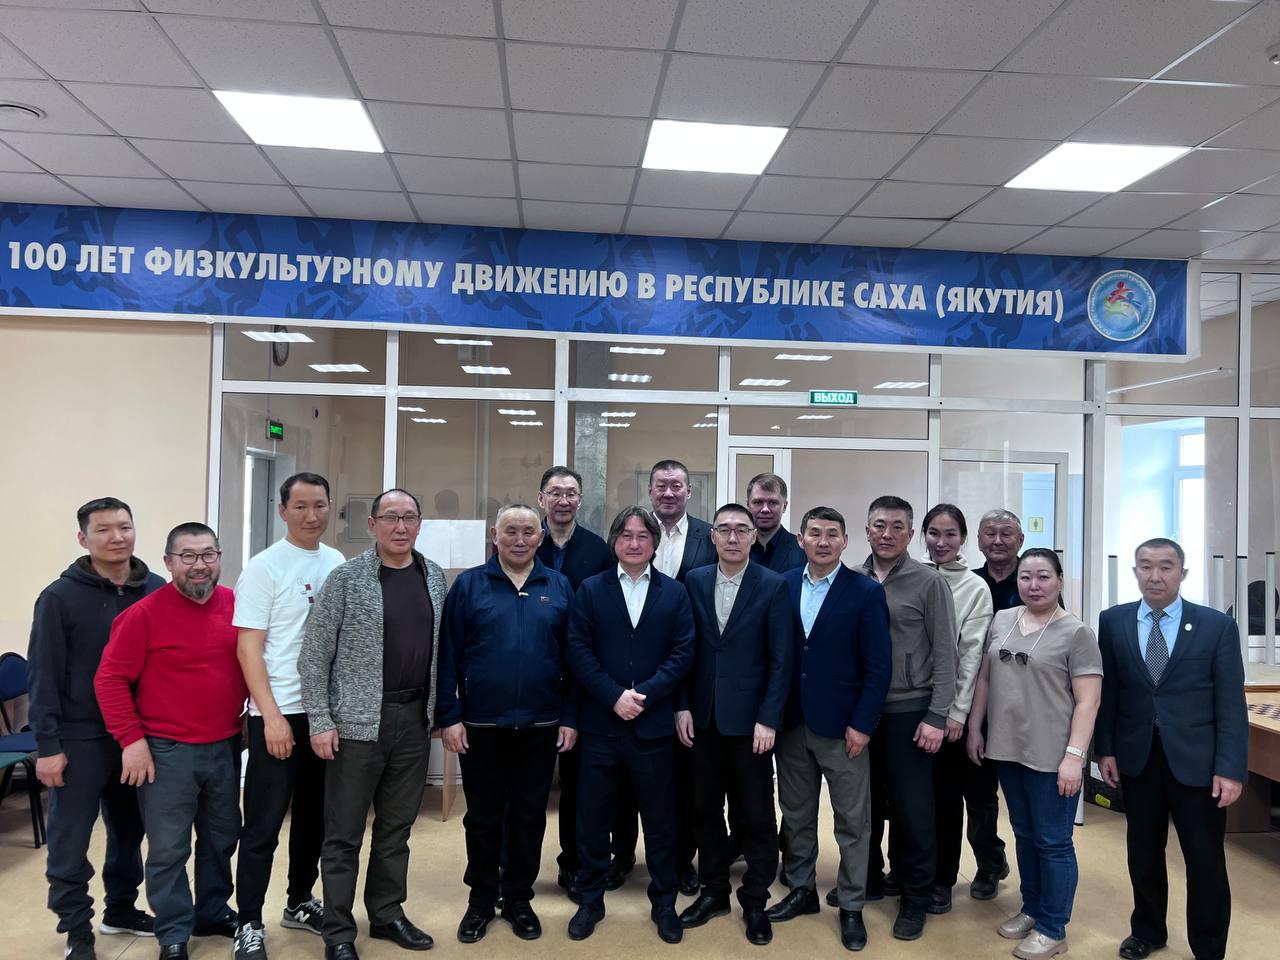 Председателем наблюдательного совета Федерации волейбола Якутии избран Джулустан Борисов